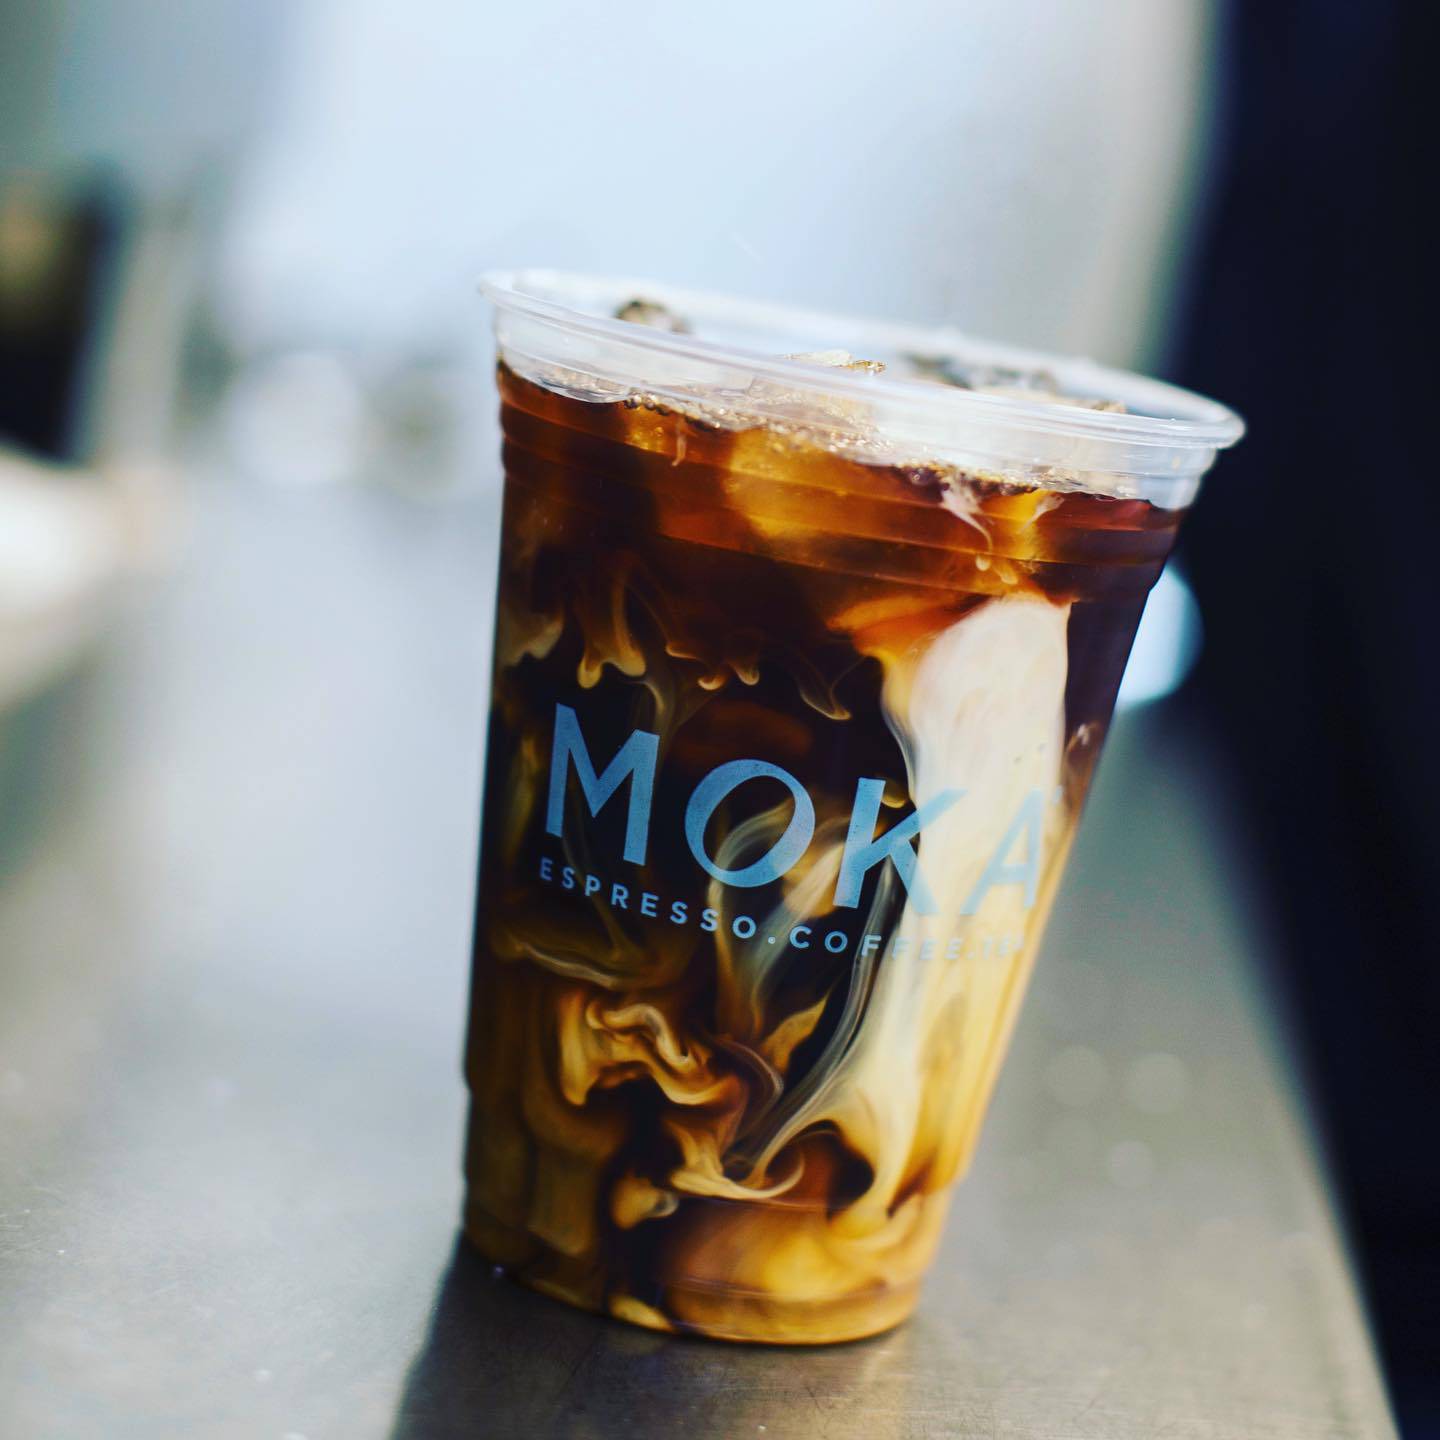 MOKA Coffee is one of the finest coffee shops in Kane County. (MOKA Coffee via Facebook)